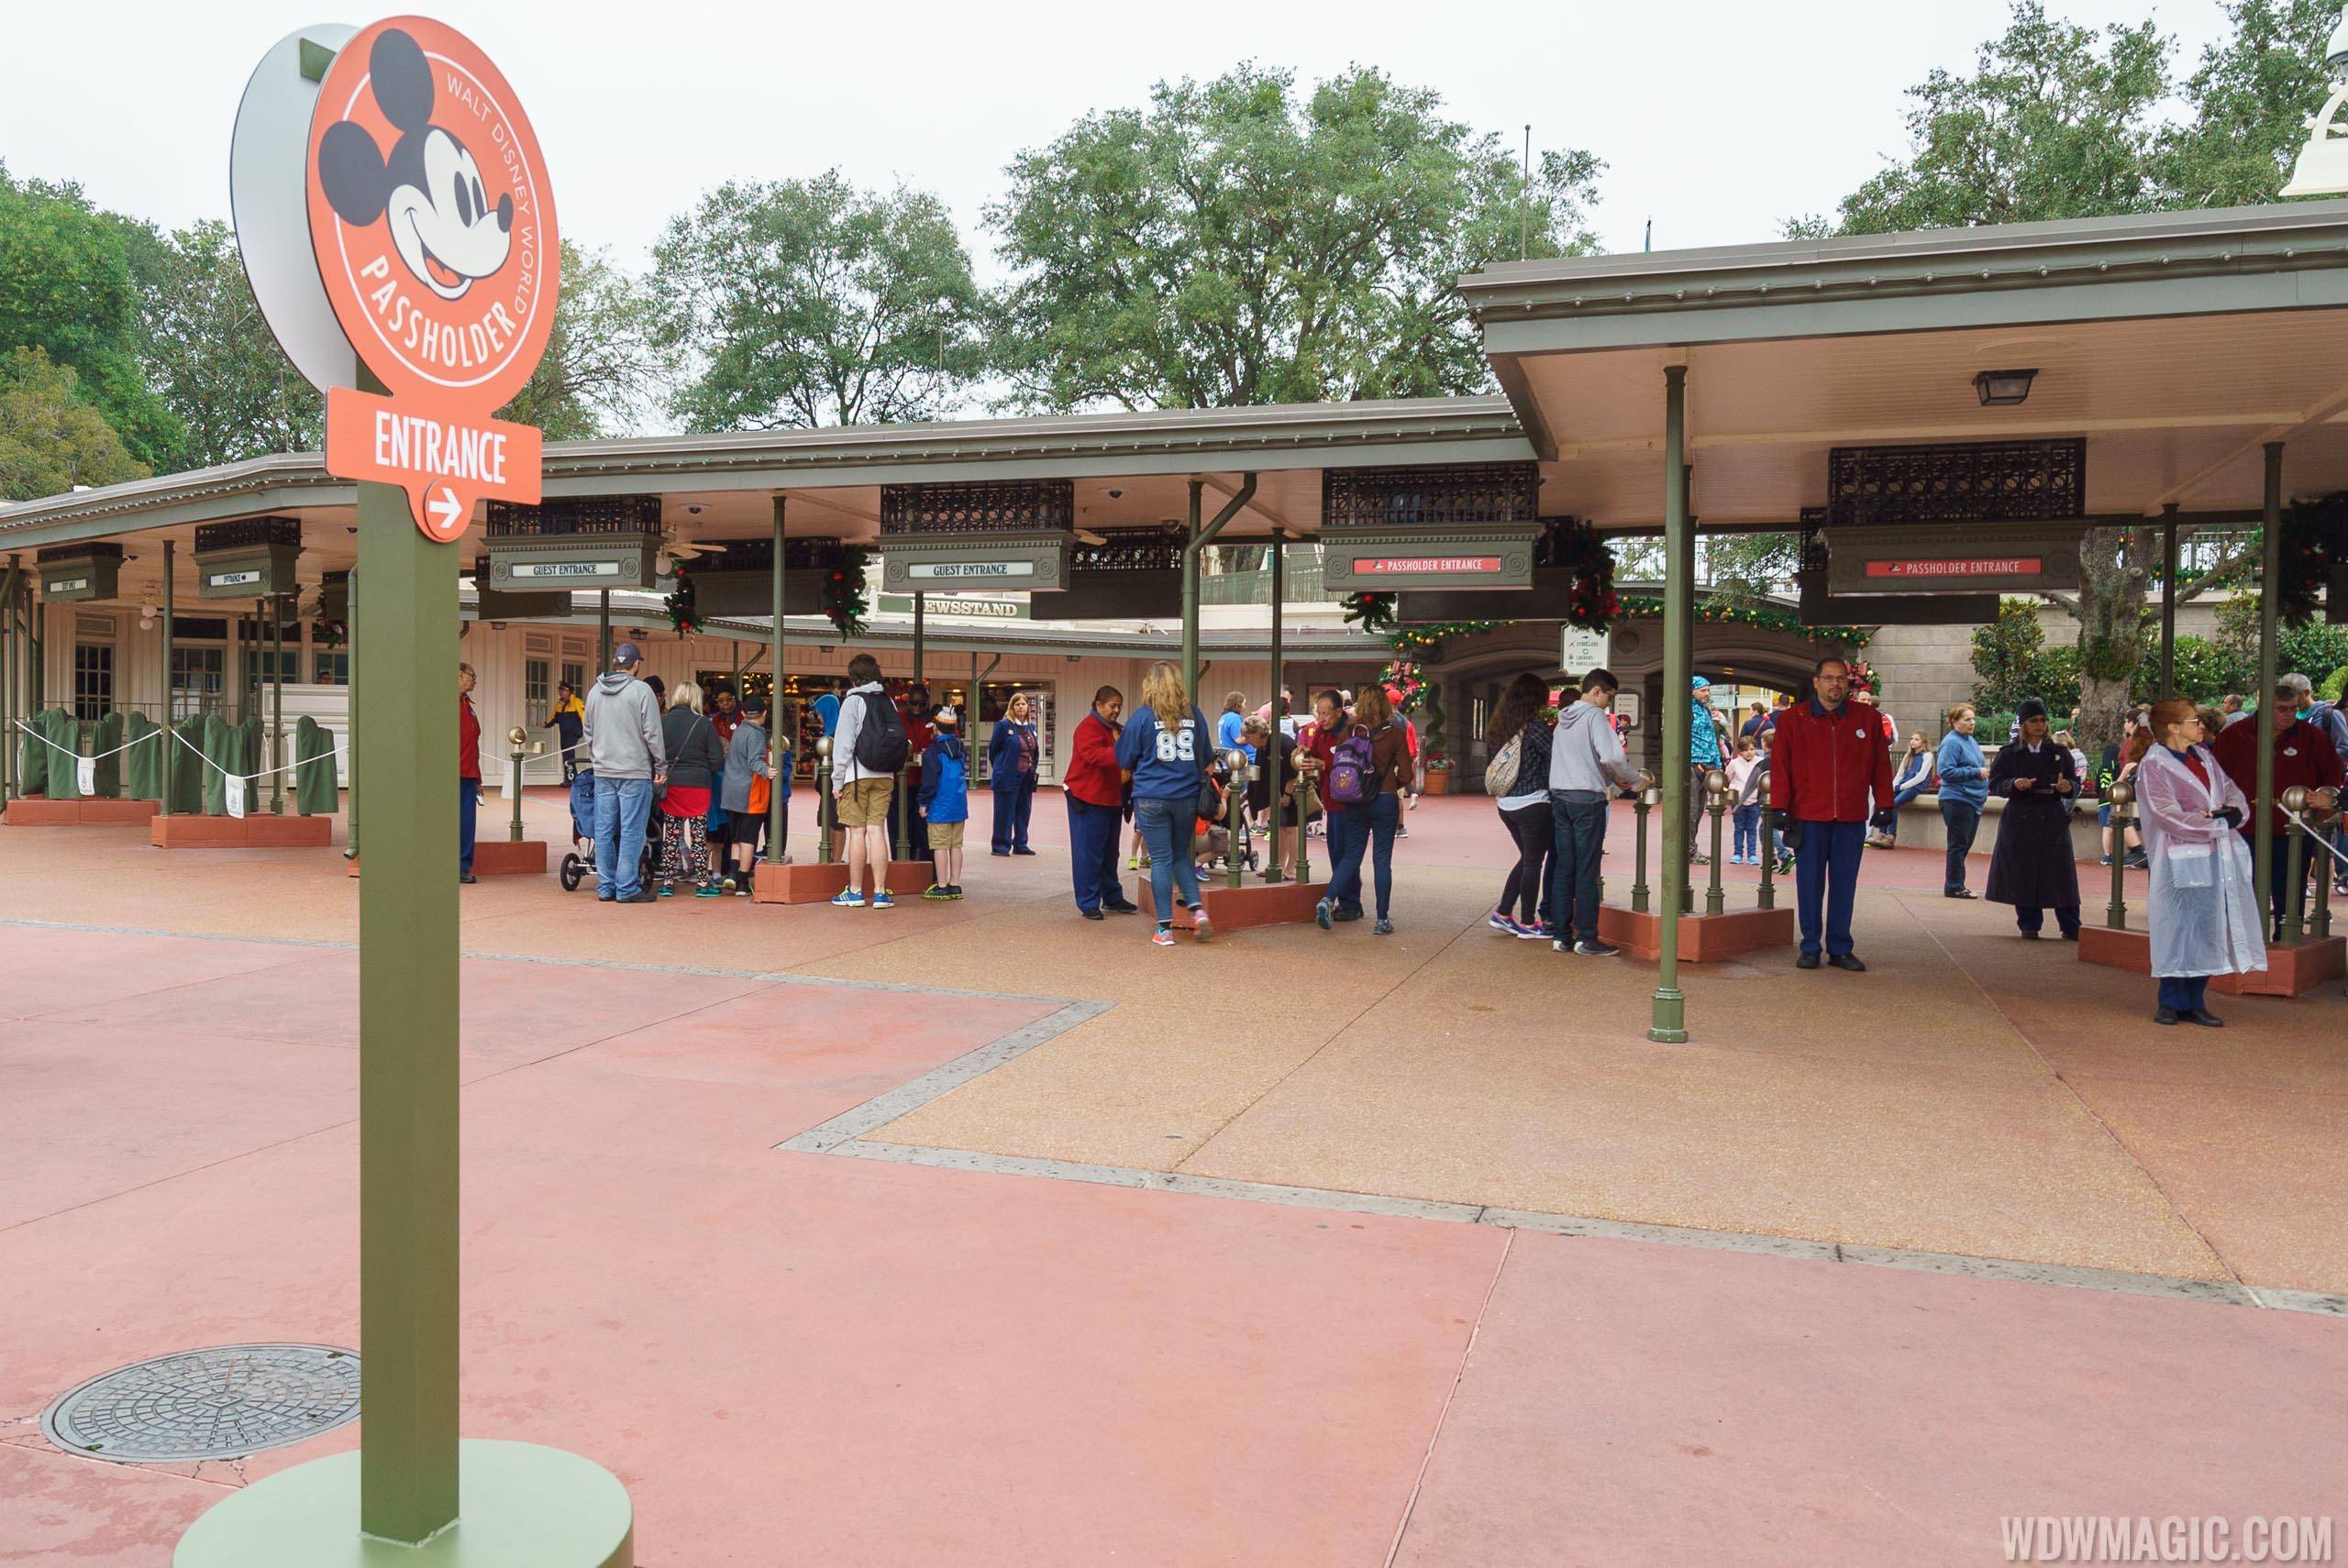 PHOTOS - Annual Passholder entrances debut at Walt Disney World